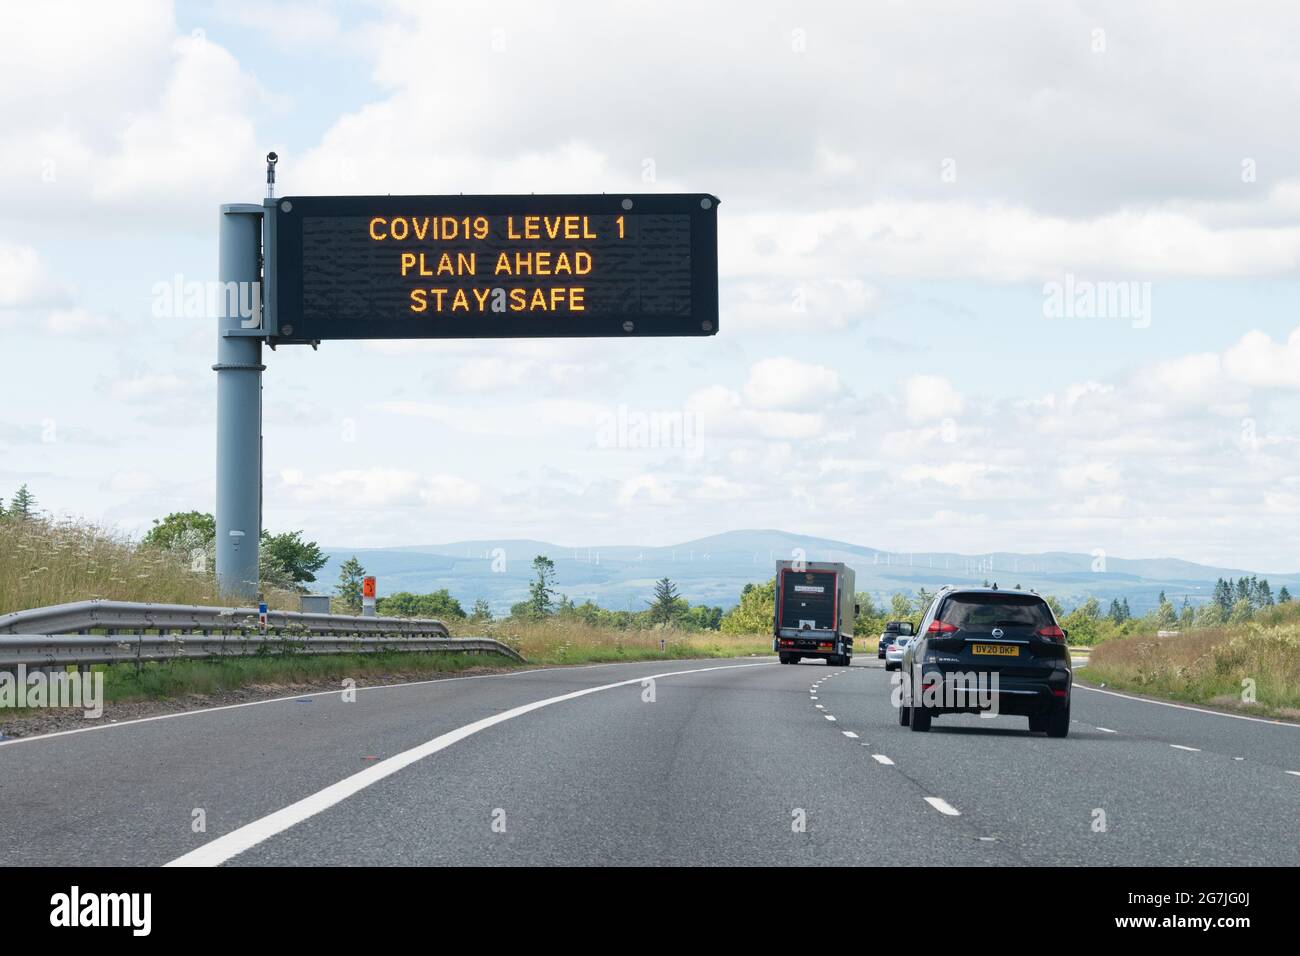 COVID19 level 1 motorway sign, Scotland, UK during coronavirus pandemic Stock Photo